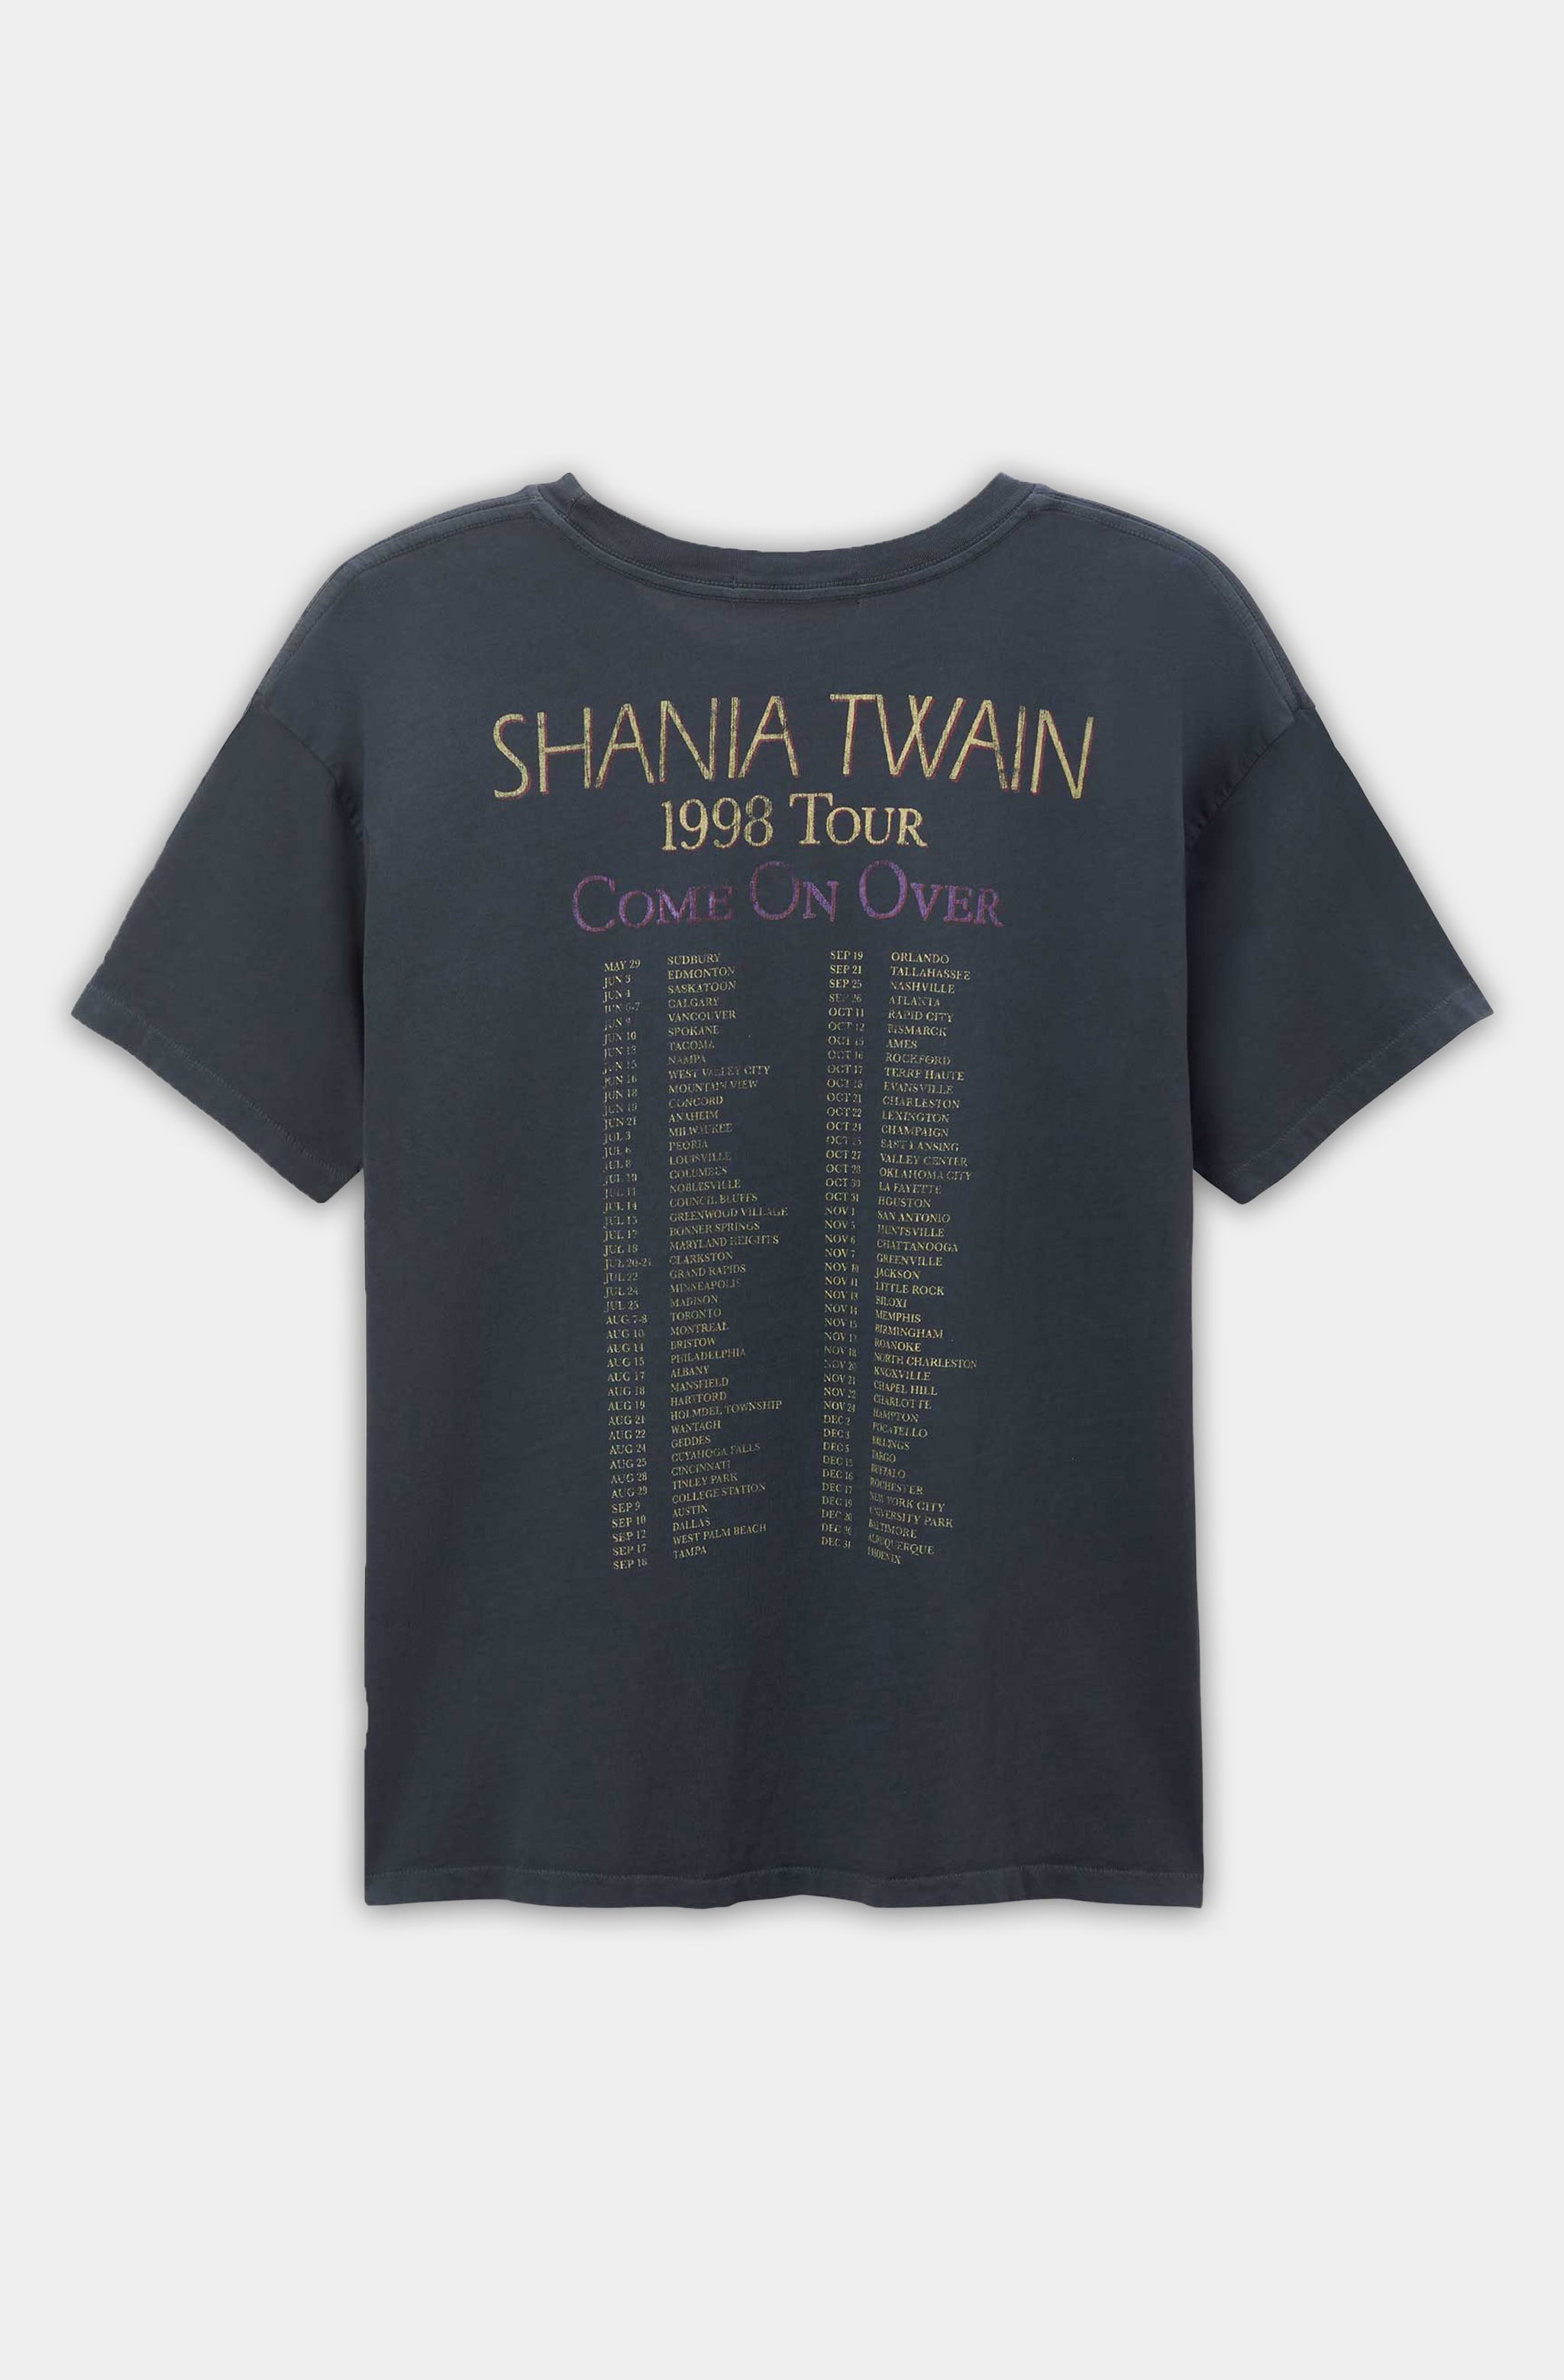 Shania Twain Come On Over 1988 Tour Merch Tee